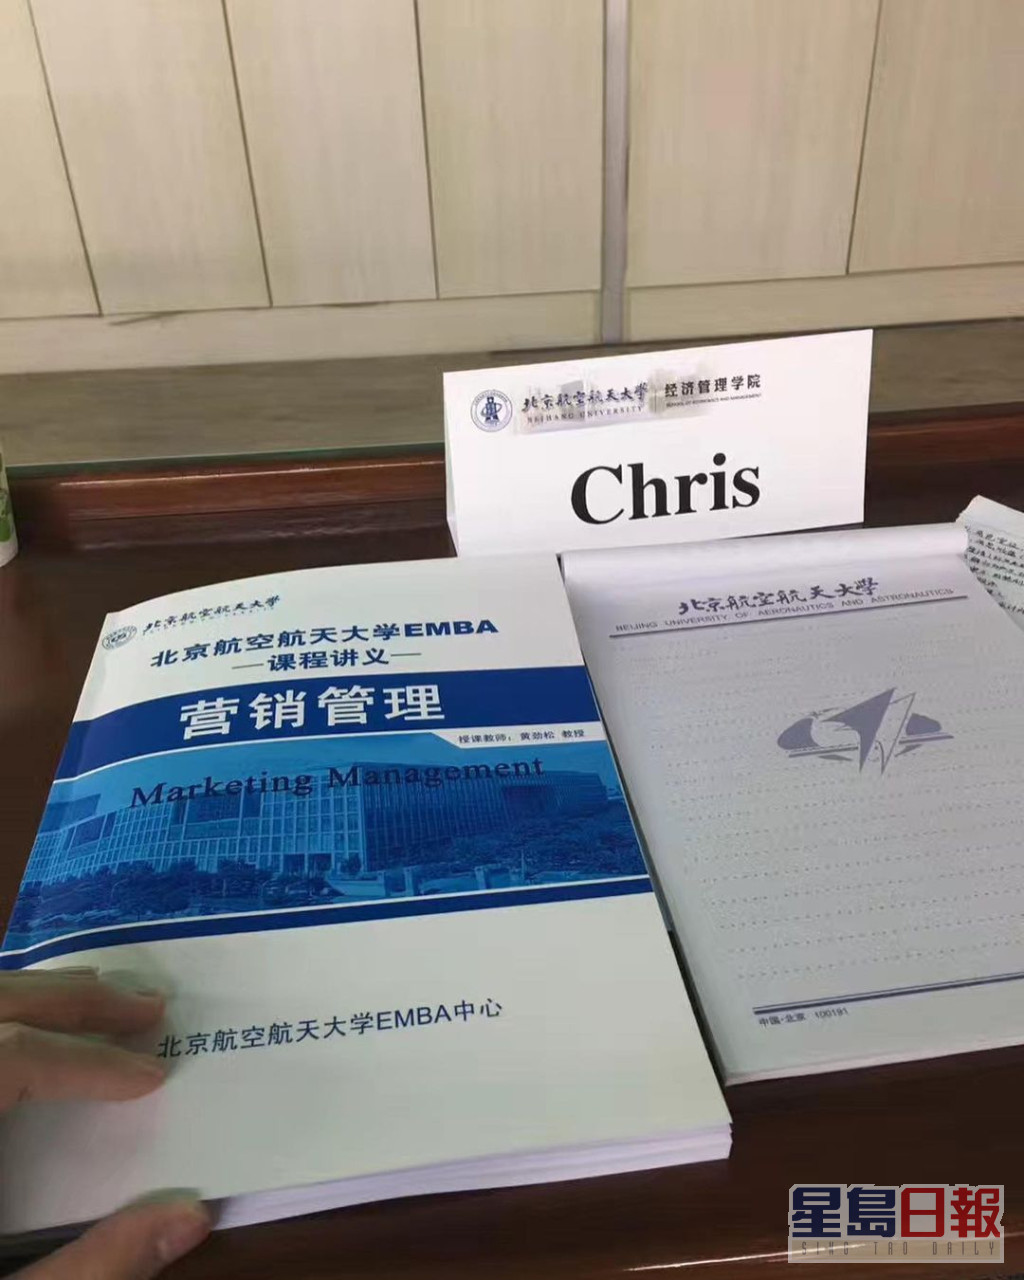 Chris報讀北京航空航天大學EMBA課程，學習營銷管理。